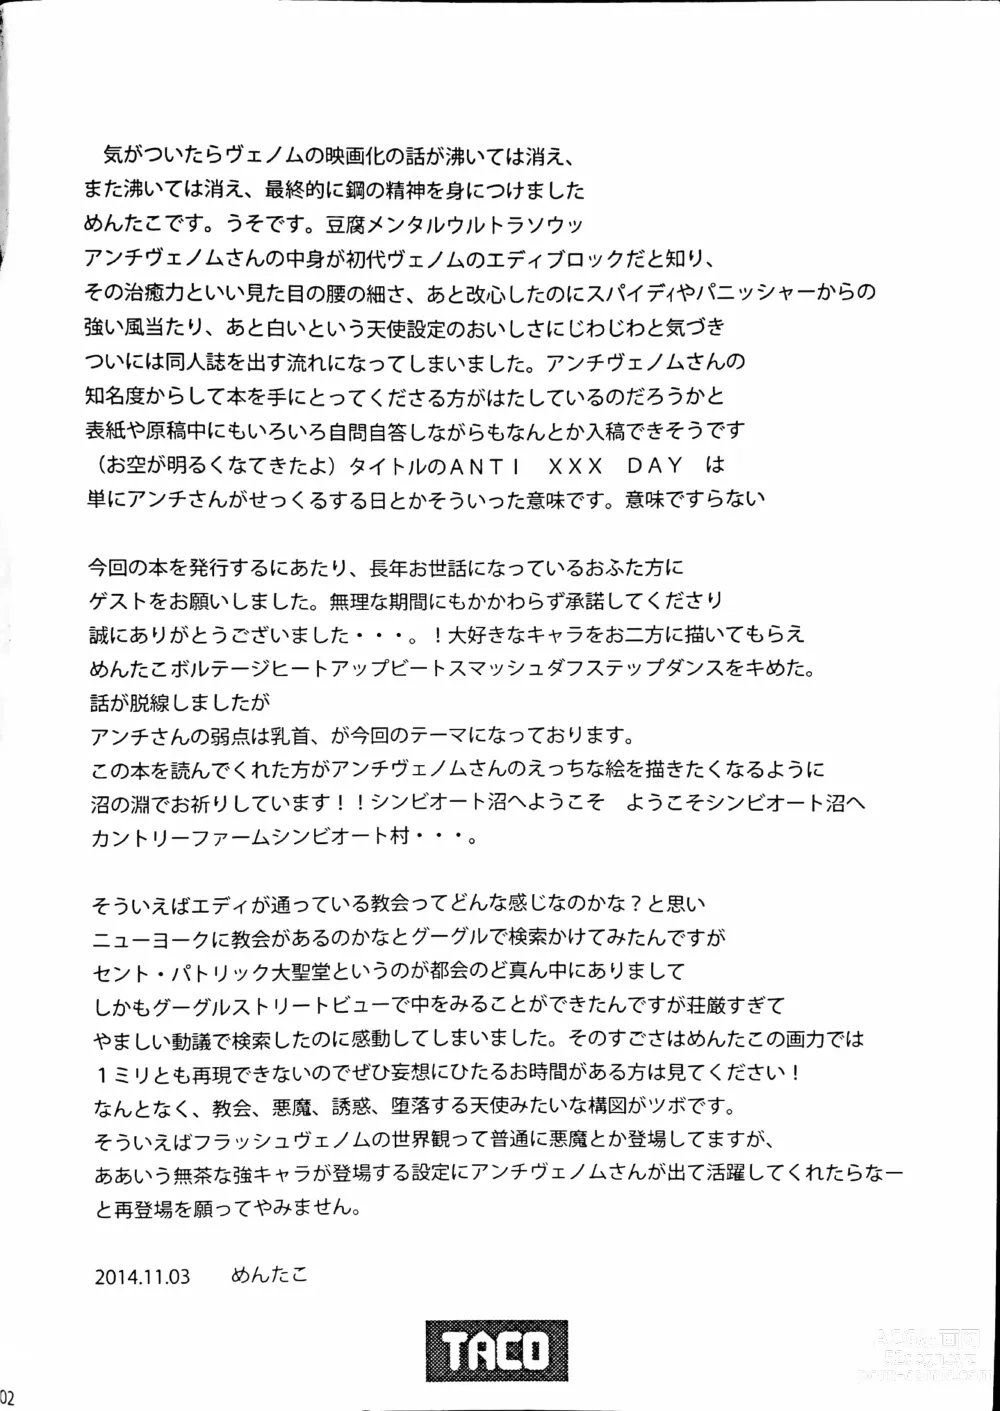 Page 3 of doujinshi ANTI XXX DAY